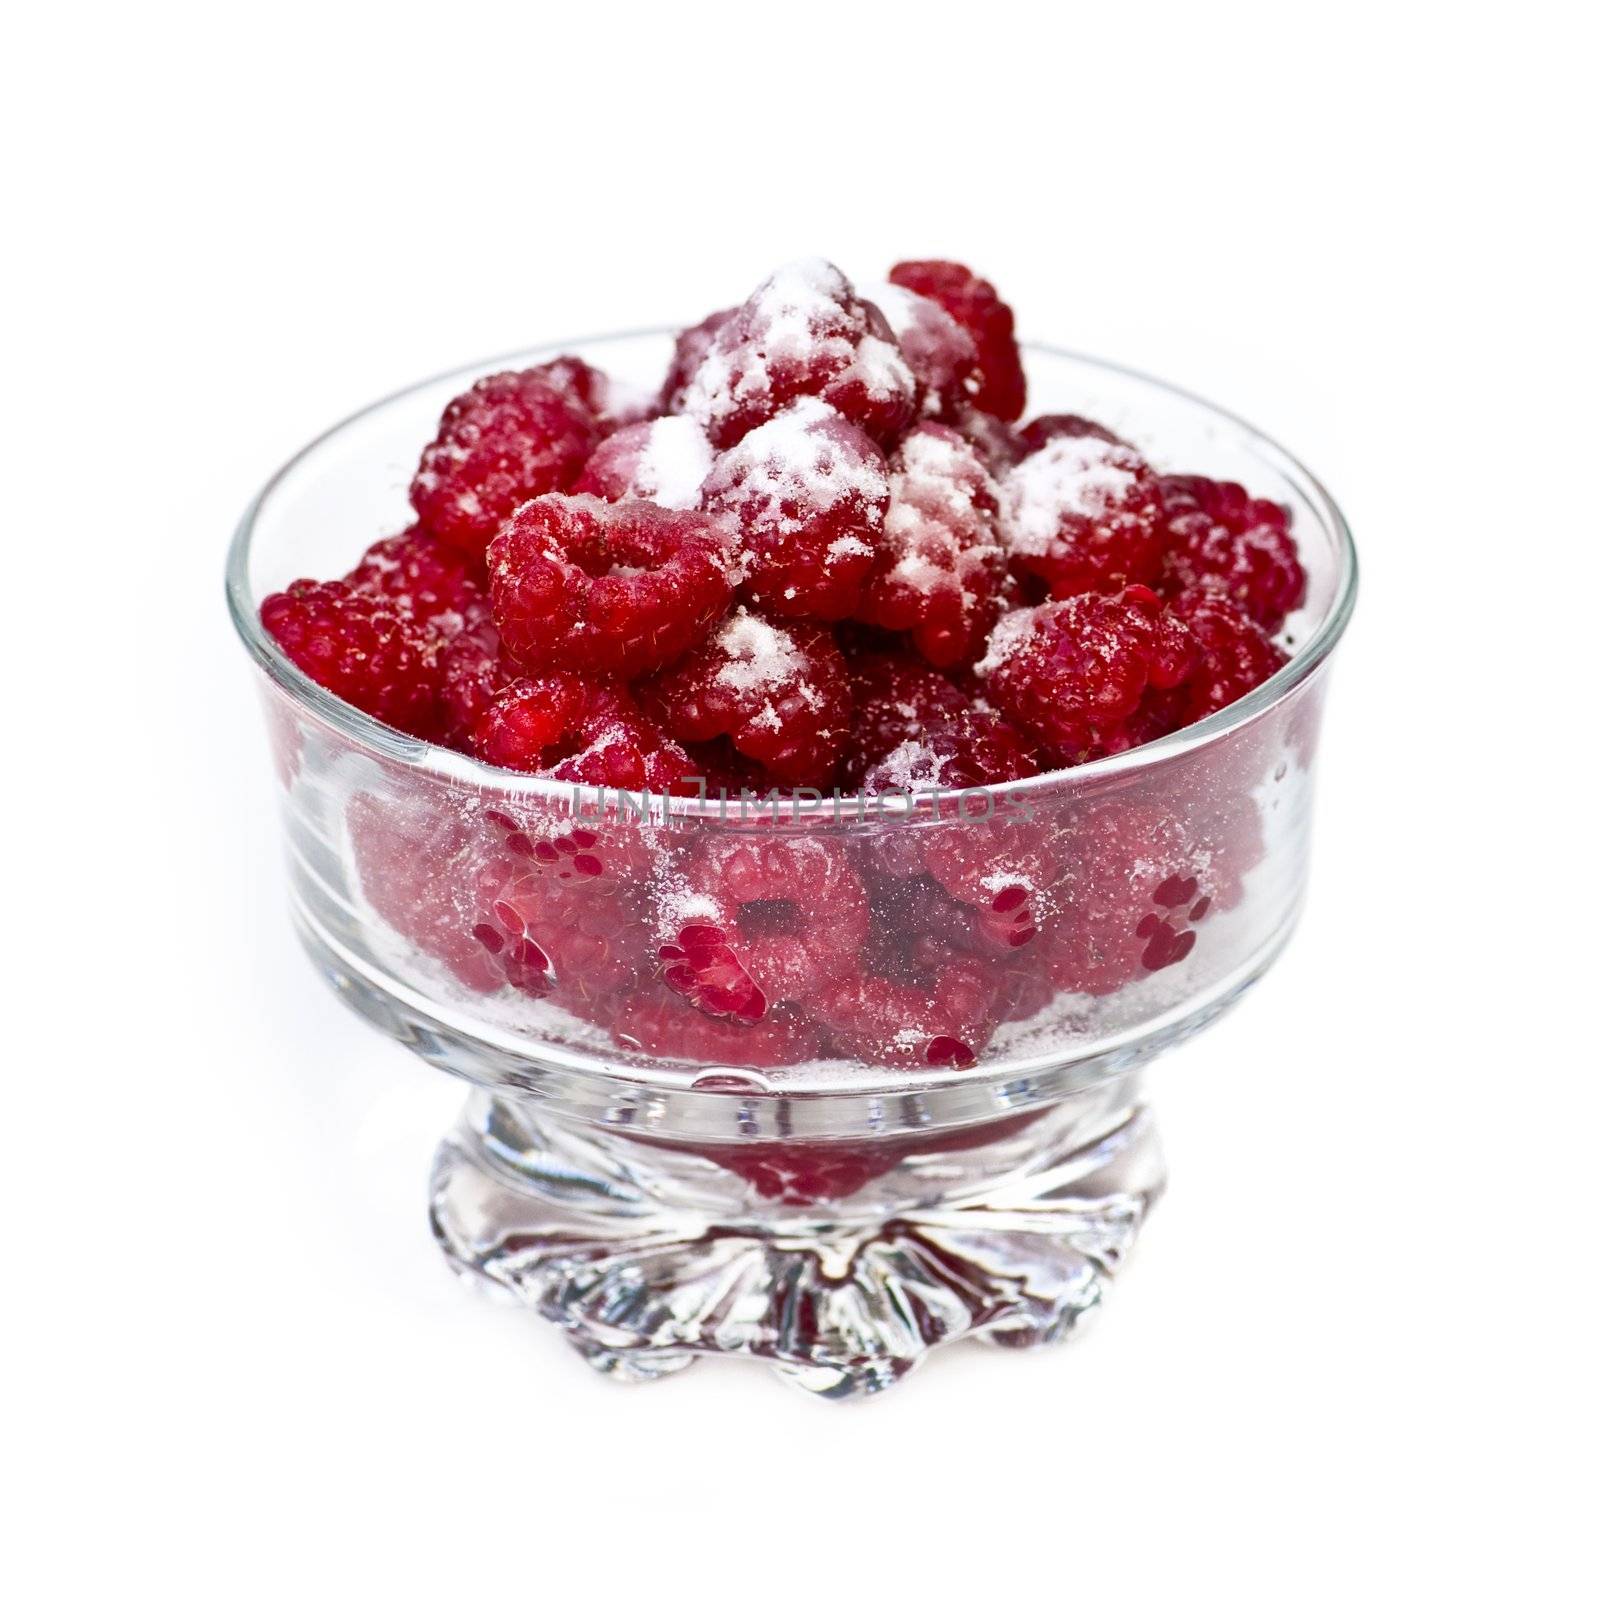 Fresh raspberries in dish by elenathewise